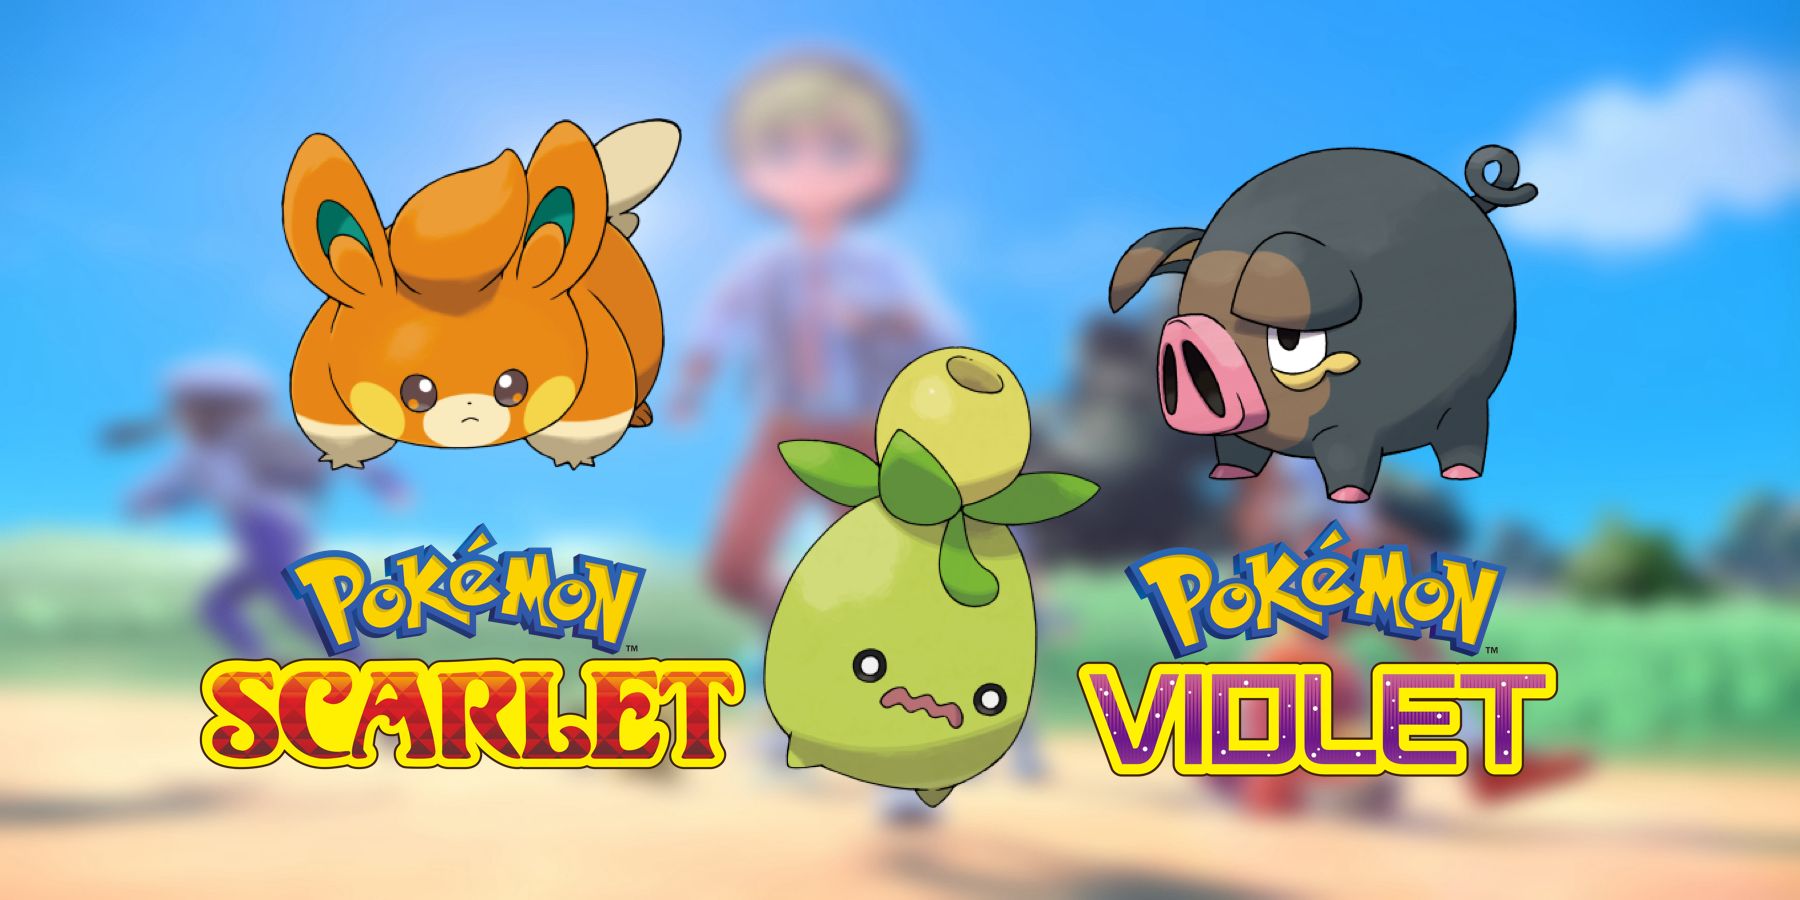 All Version Exclusives in Pokémon Scarlet & Violet